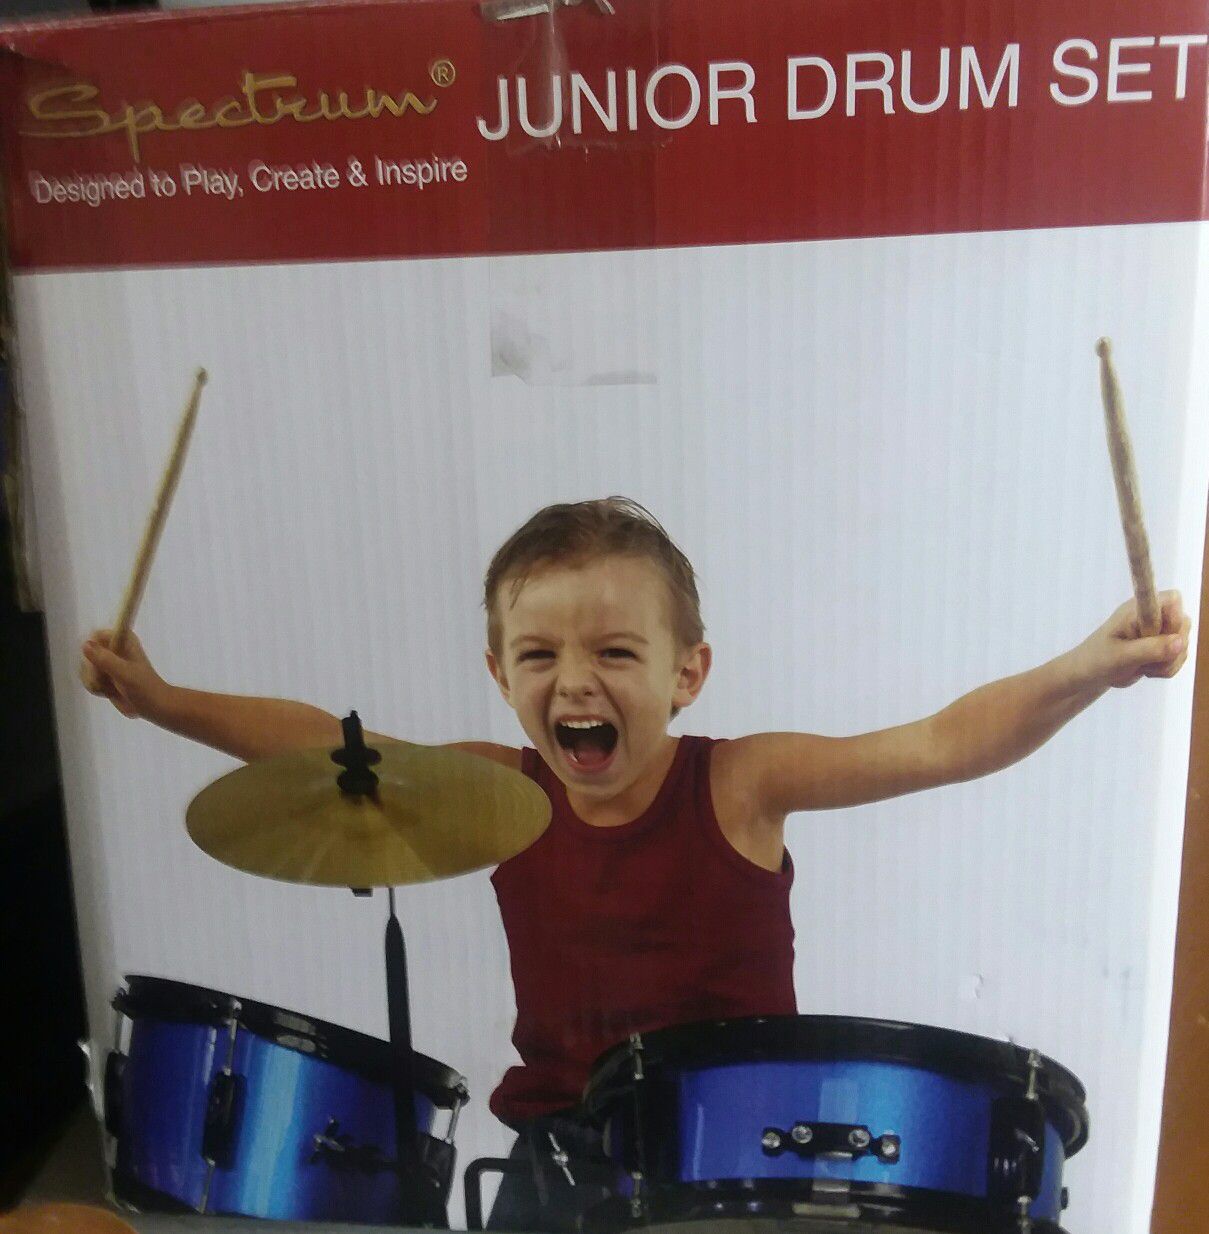 Spectrum AIL 610B Junior Drum Kit, Blazin' Blue